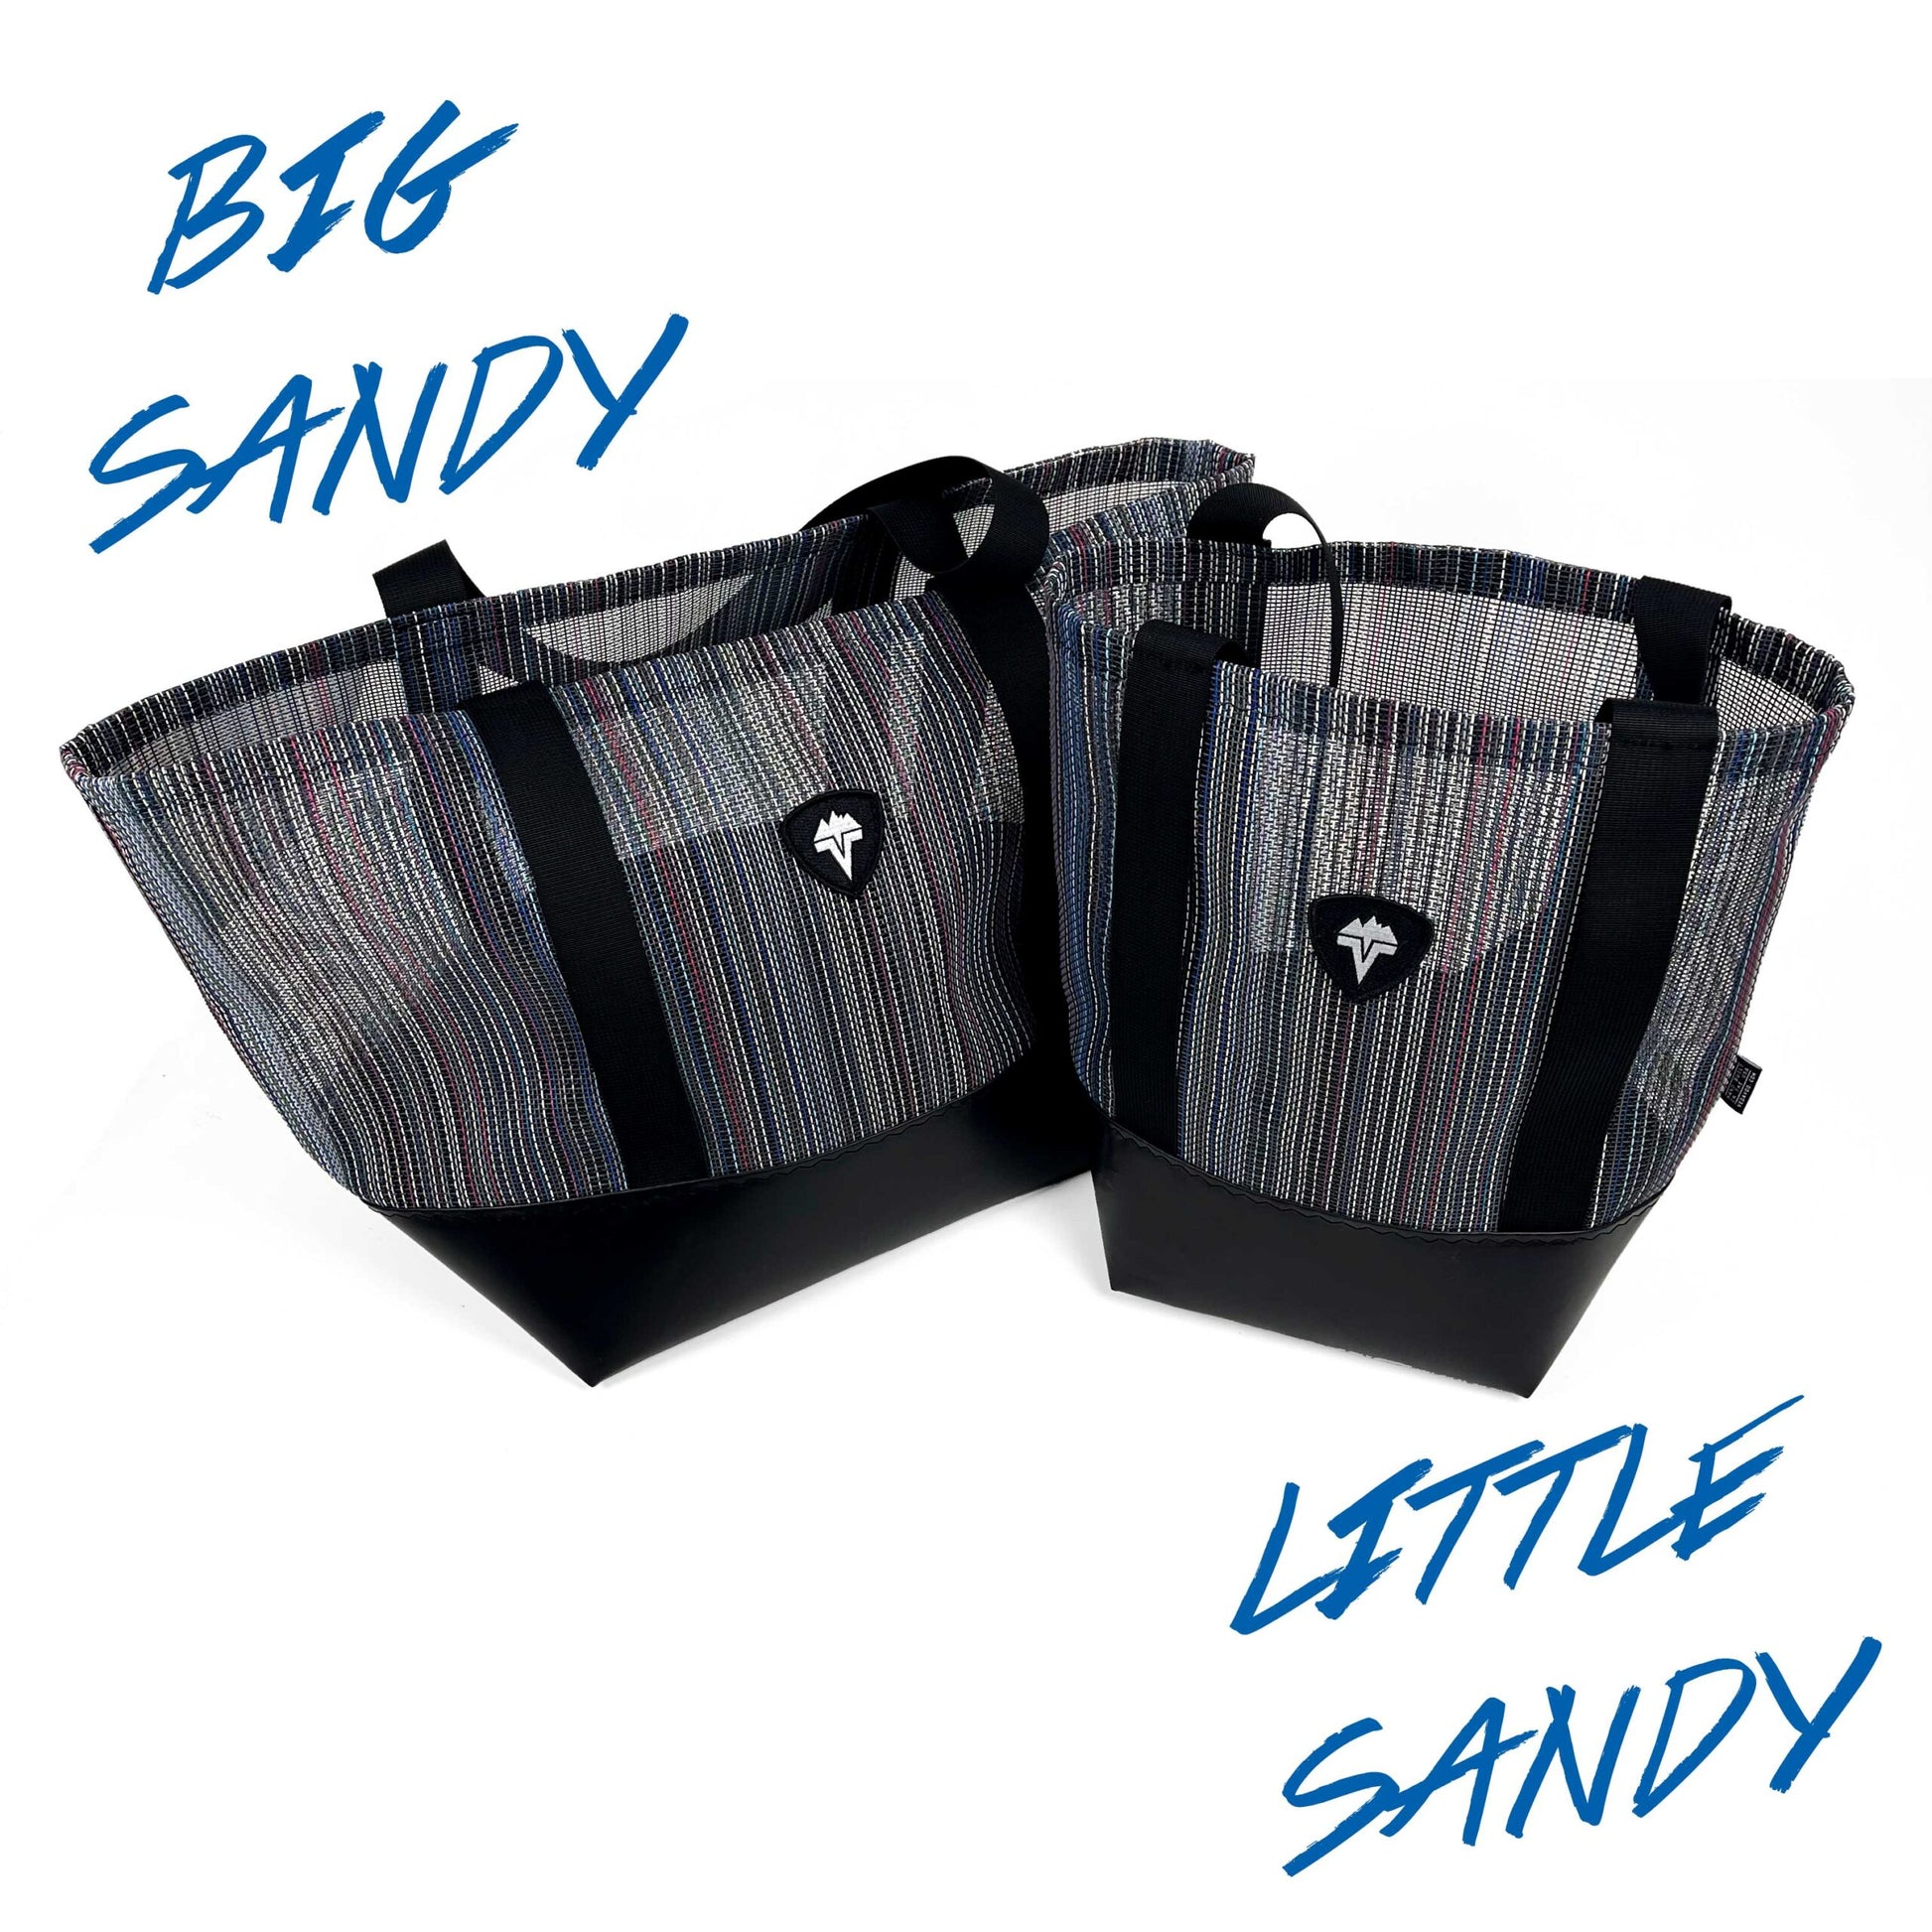 Big Sandy Mesh Tote Bag – VEDAVOO